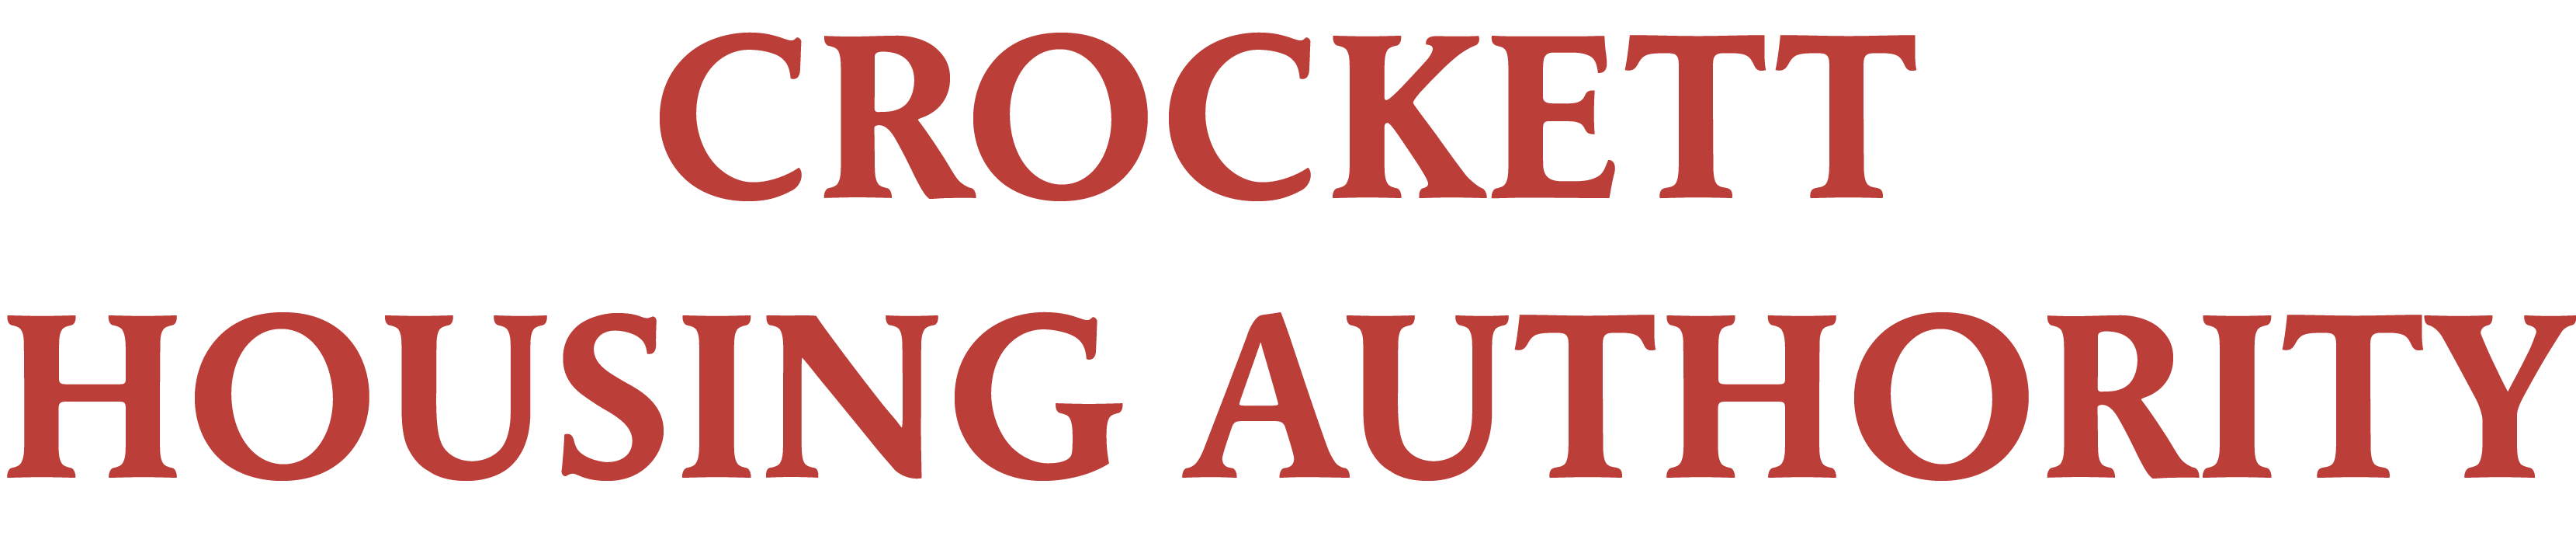 Crockett Housing Authority